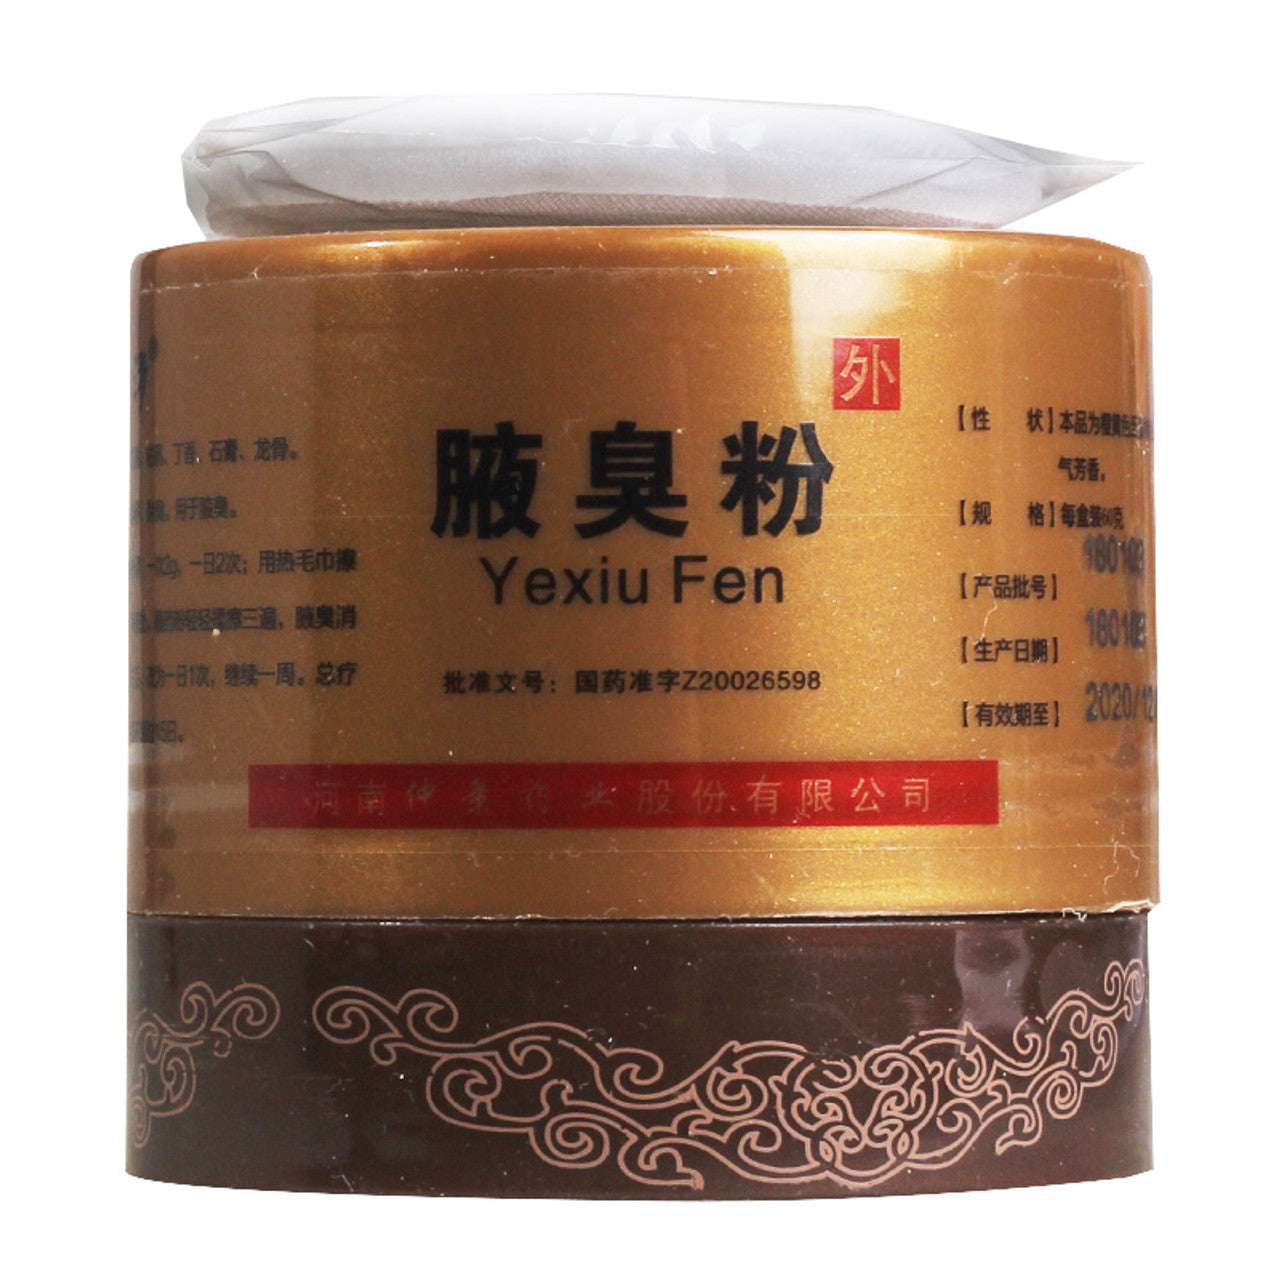 External Use. Herbal. Ye Xiu Fen / Yexiu Fen / Yexiu Powder / underarm powder